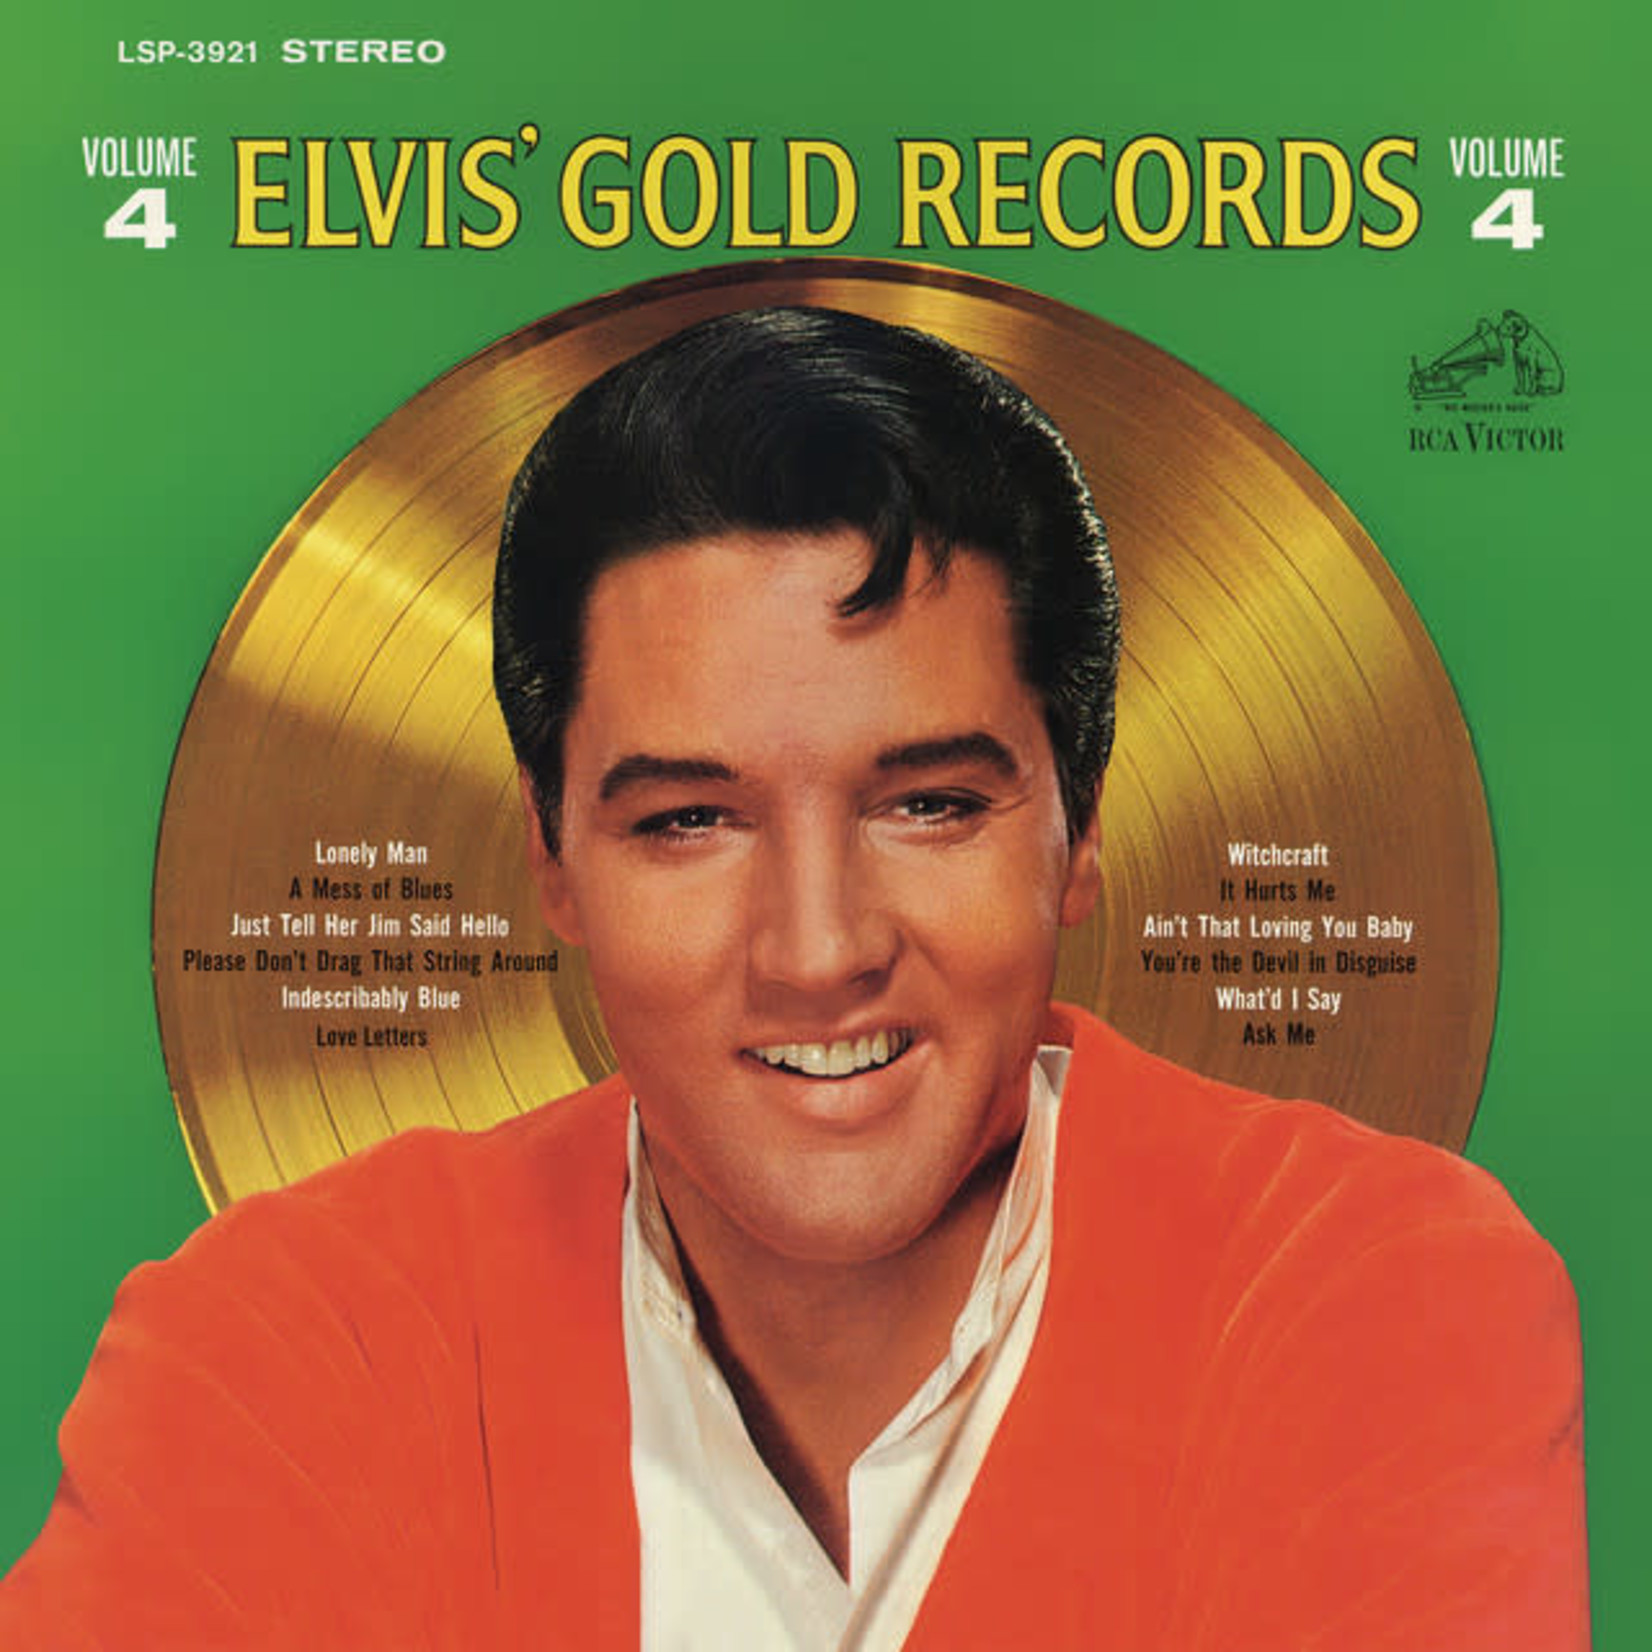 [Vintage] Presley, Elvis: Elvis' Gold Records Vol. 4 (Stereo) [VINTAGE]